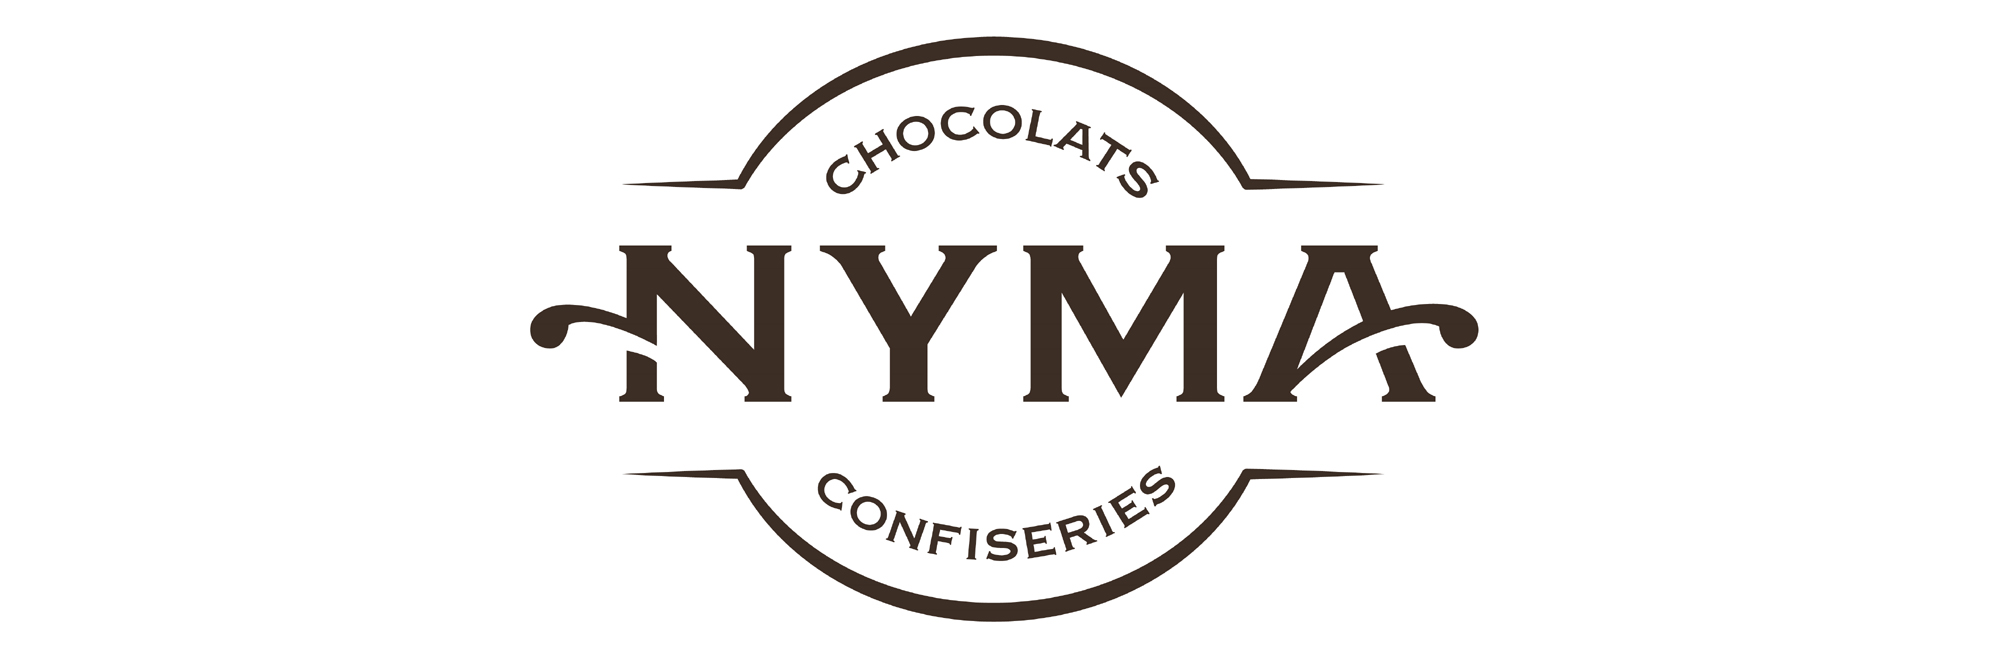 Nyma Chocolats et Confiseries